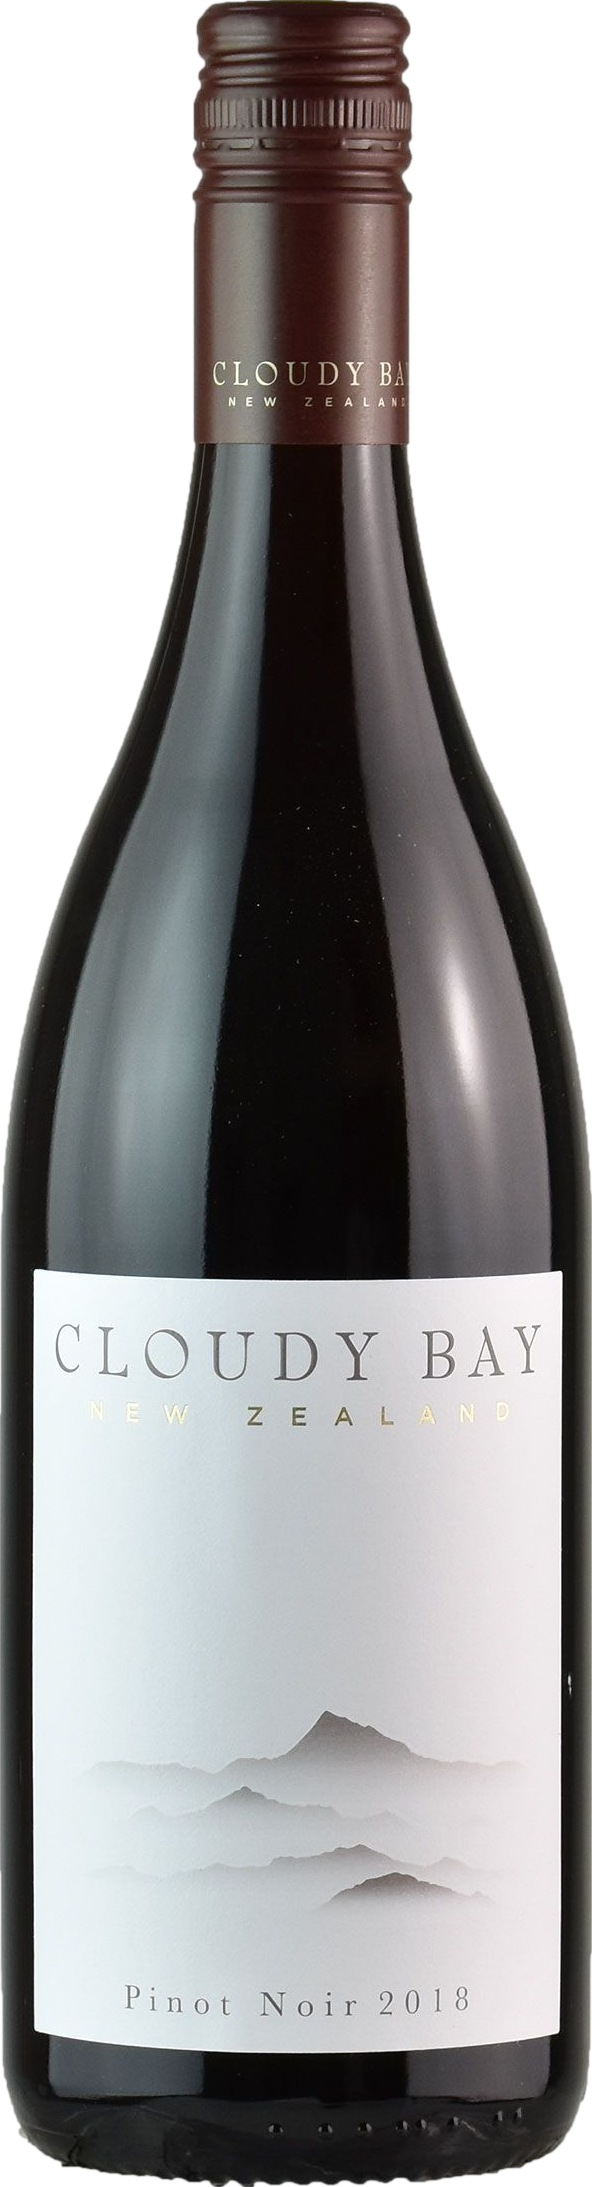 Cloudy Bay Pinot Noir 2019, Marlborough